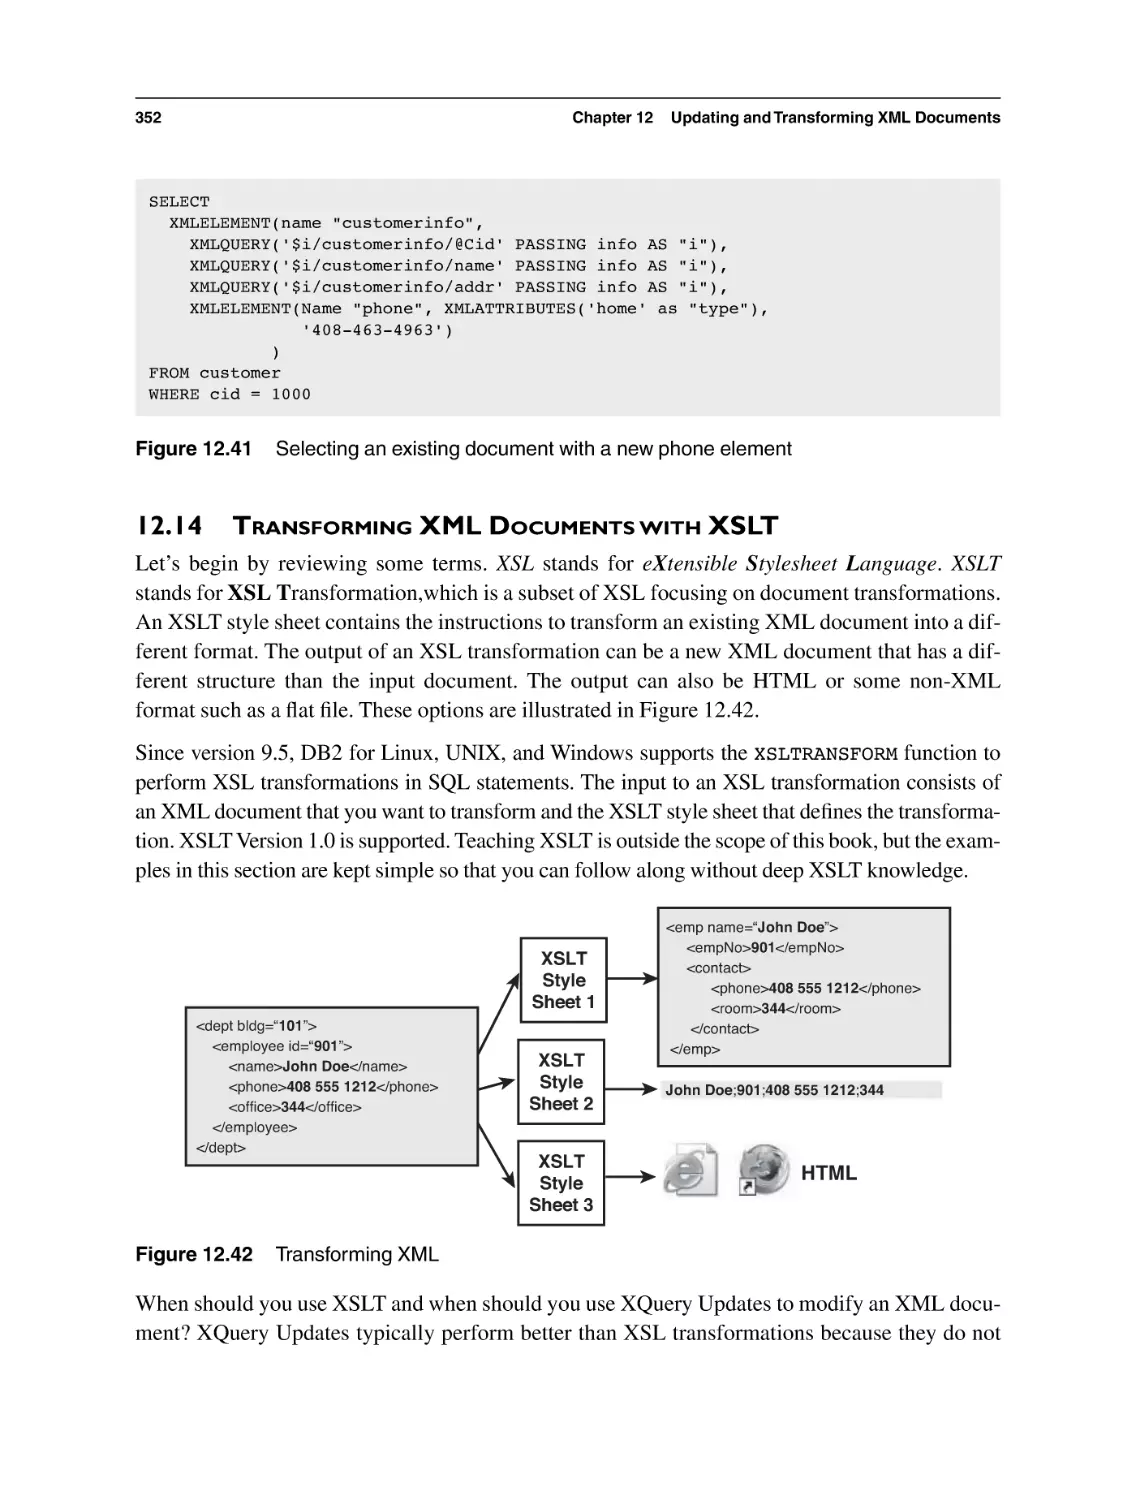 12.14 Transforming XML Documents with XSLT